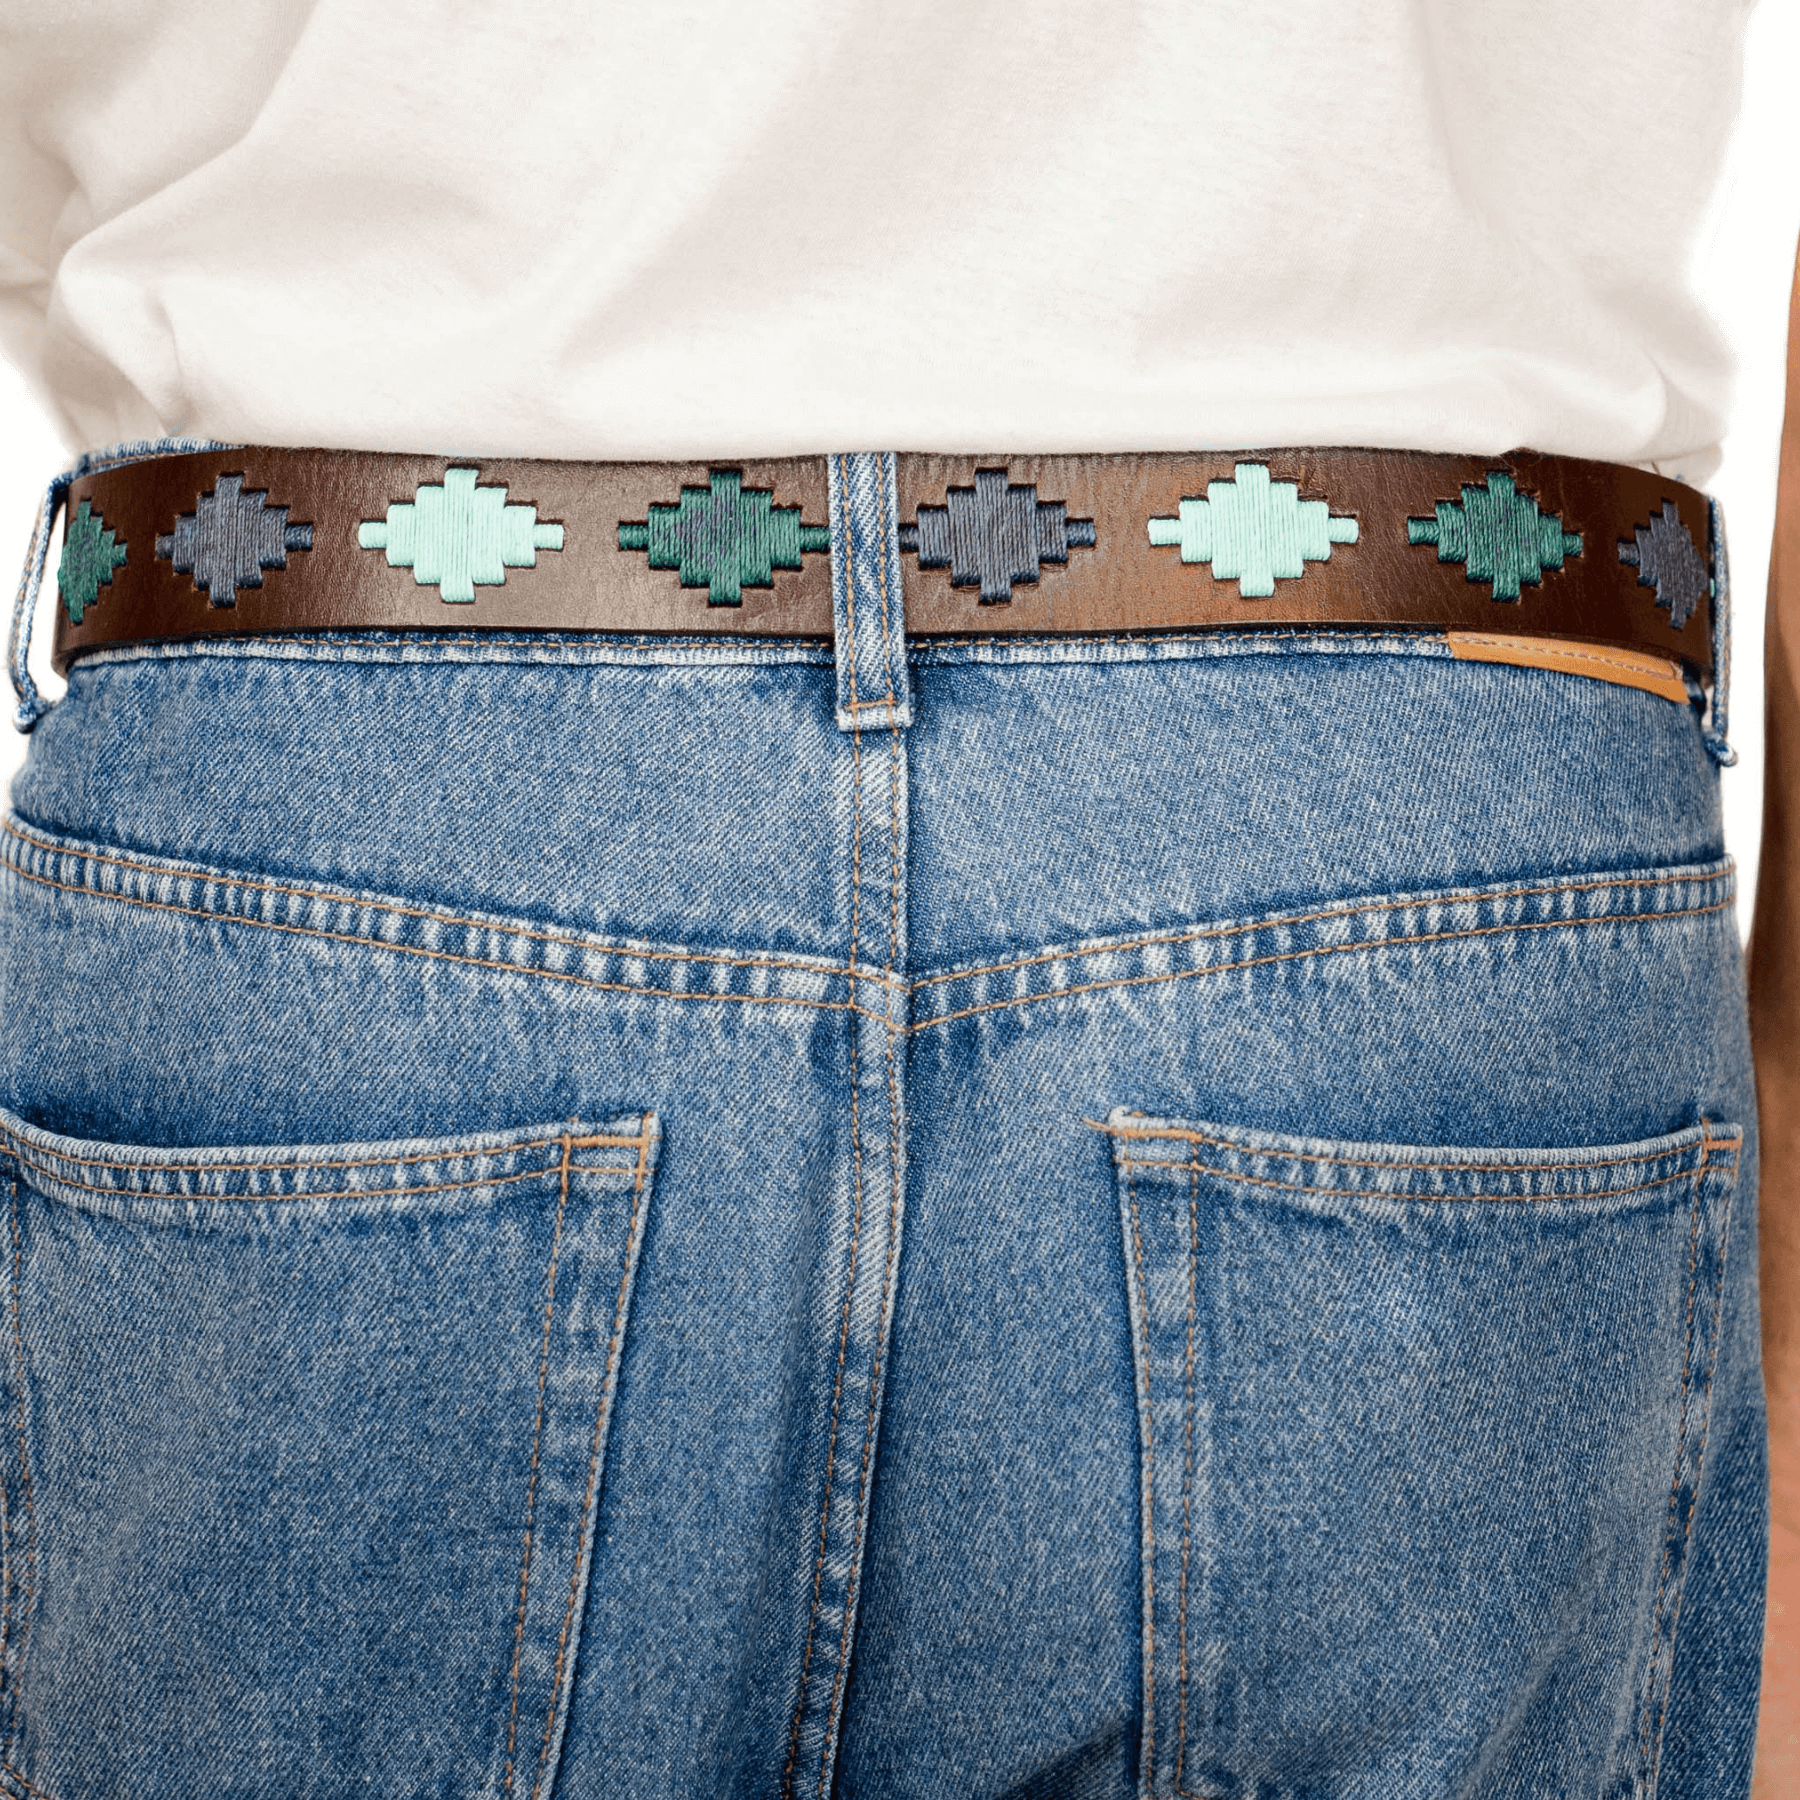 Gaucholife Belts Embroidered Belt (Green/Blue)